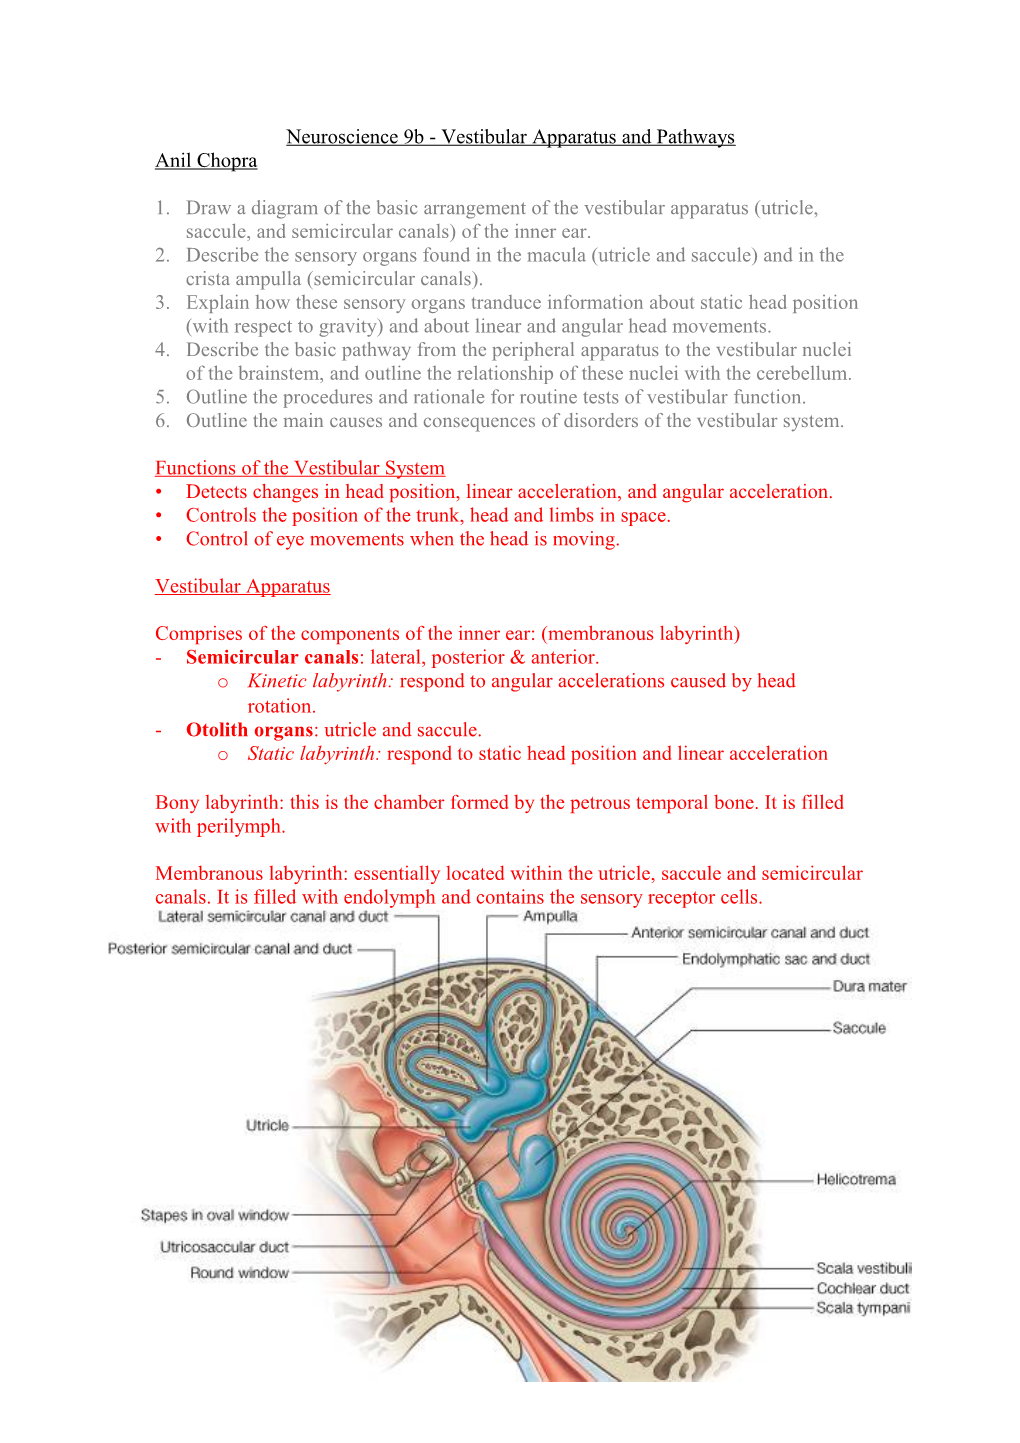 Neuroscience 9B - Vestibular Apparatus and Pathways